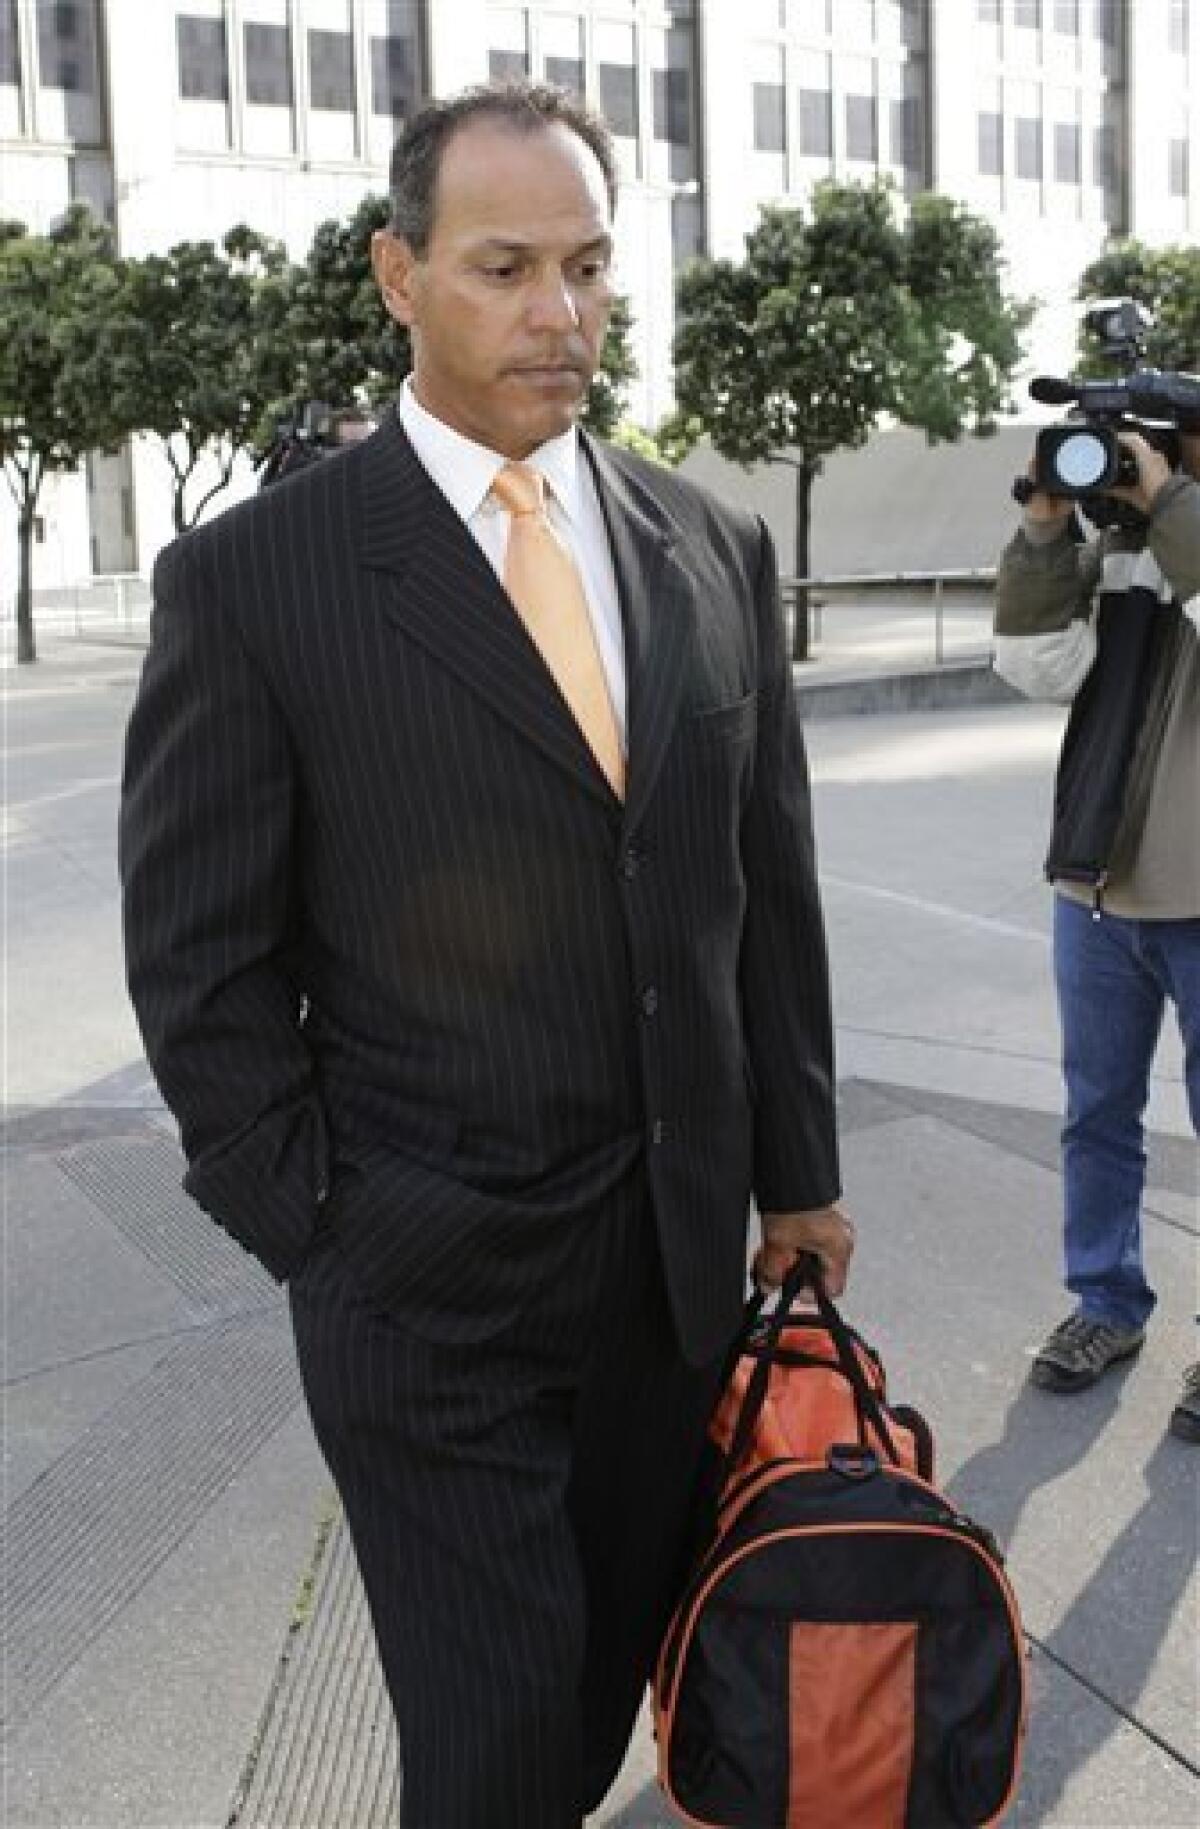 Velarde says Bonds' trainer sold him HGH - The San Diego Union-Tribune